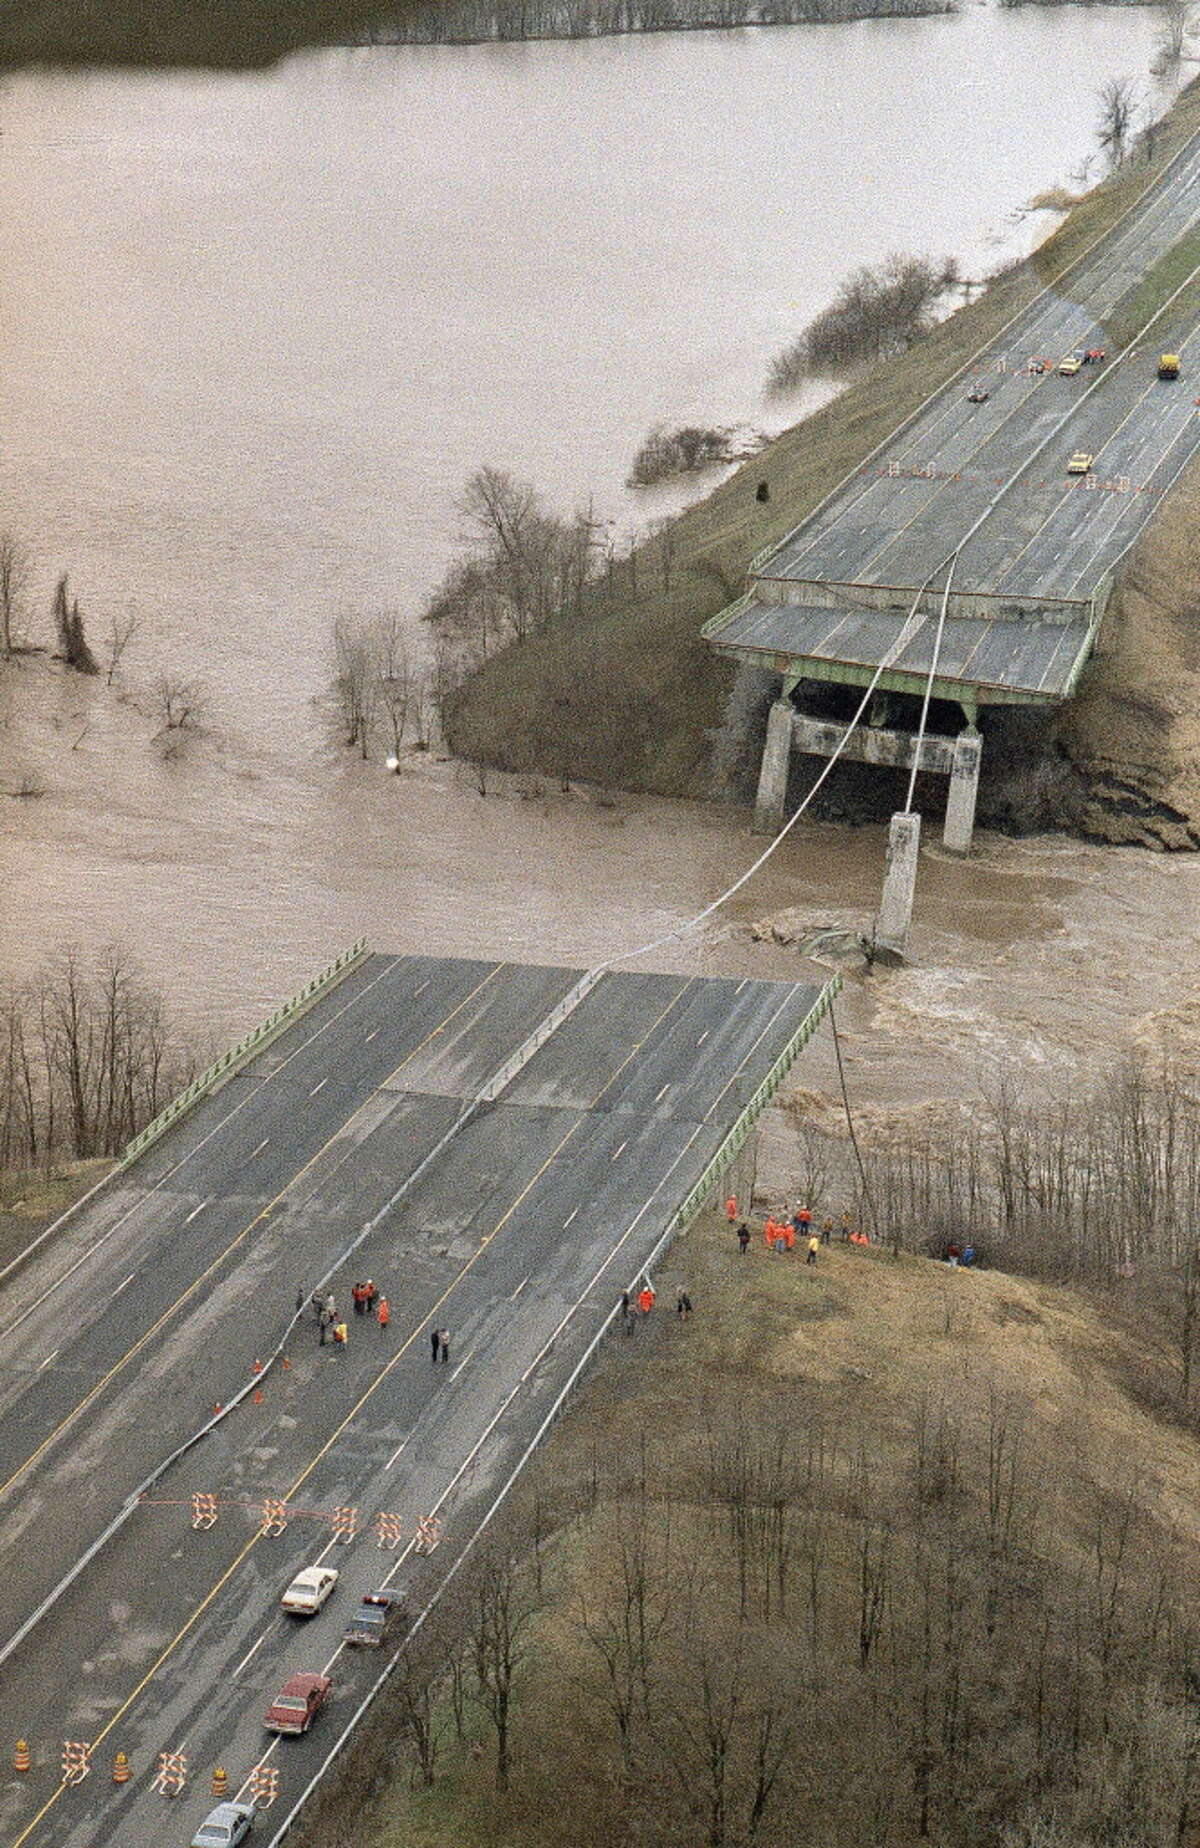 30 years ago Bridge collapse kills 10